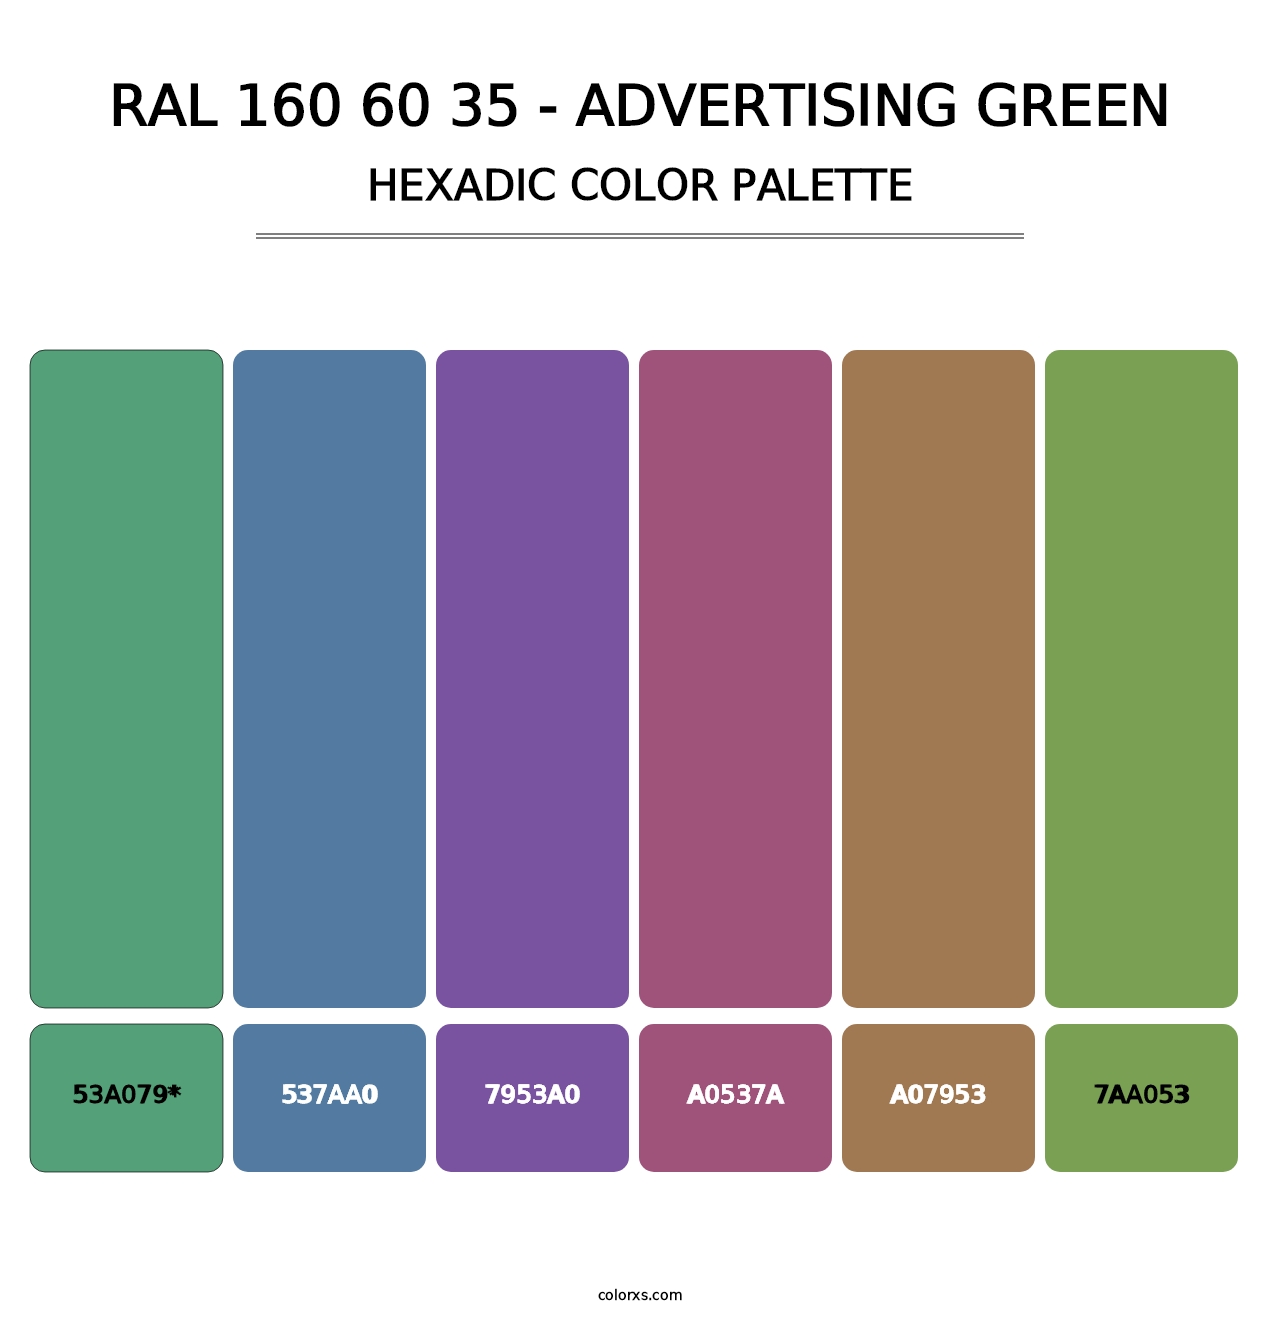 RAL 160 60 35 - Advertising Green - Hexadic Color Palette